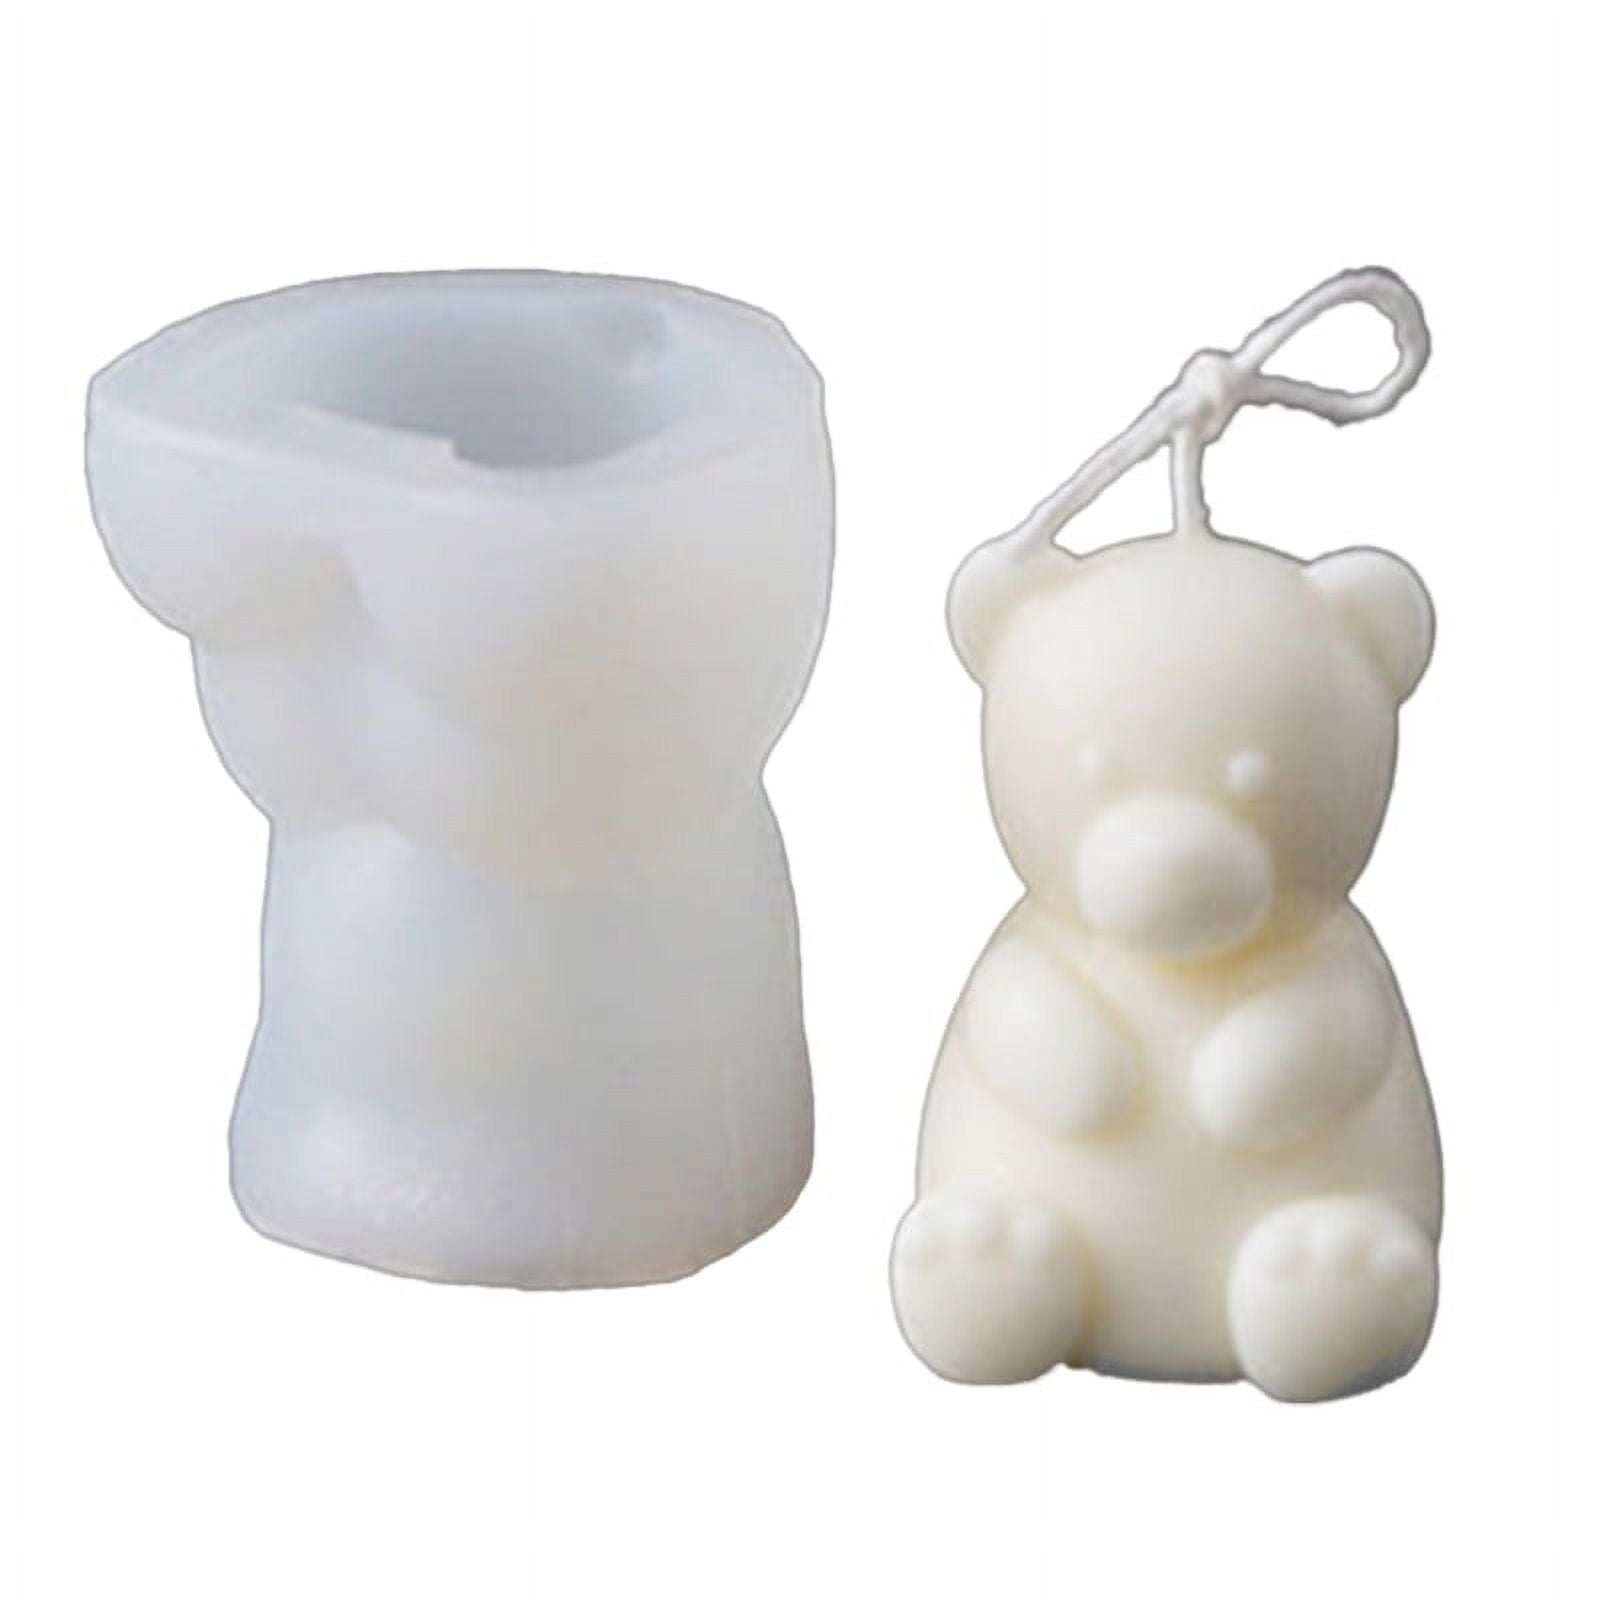 3d Hug Heart Teddy Bear Mold Silicone Epoxy Mold for Resin Epoxy Manual DIY  Craft Tool Supplies 